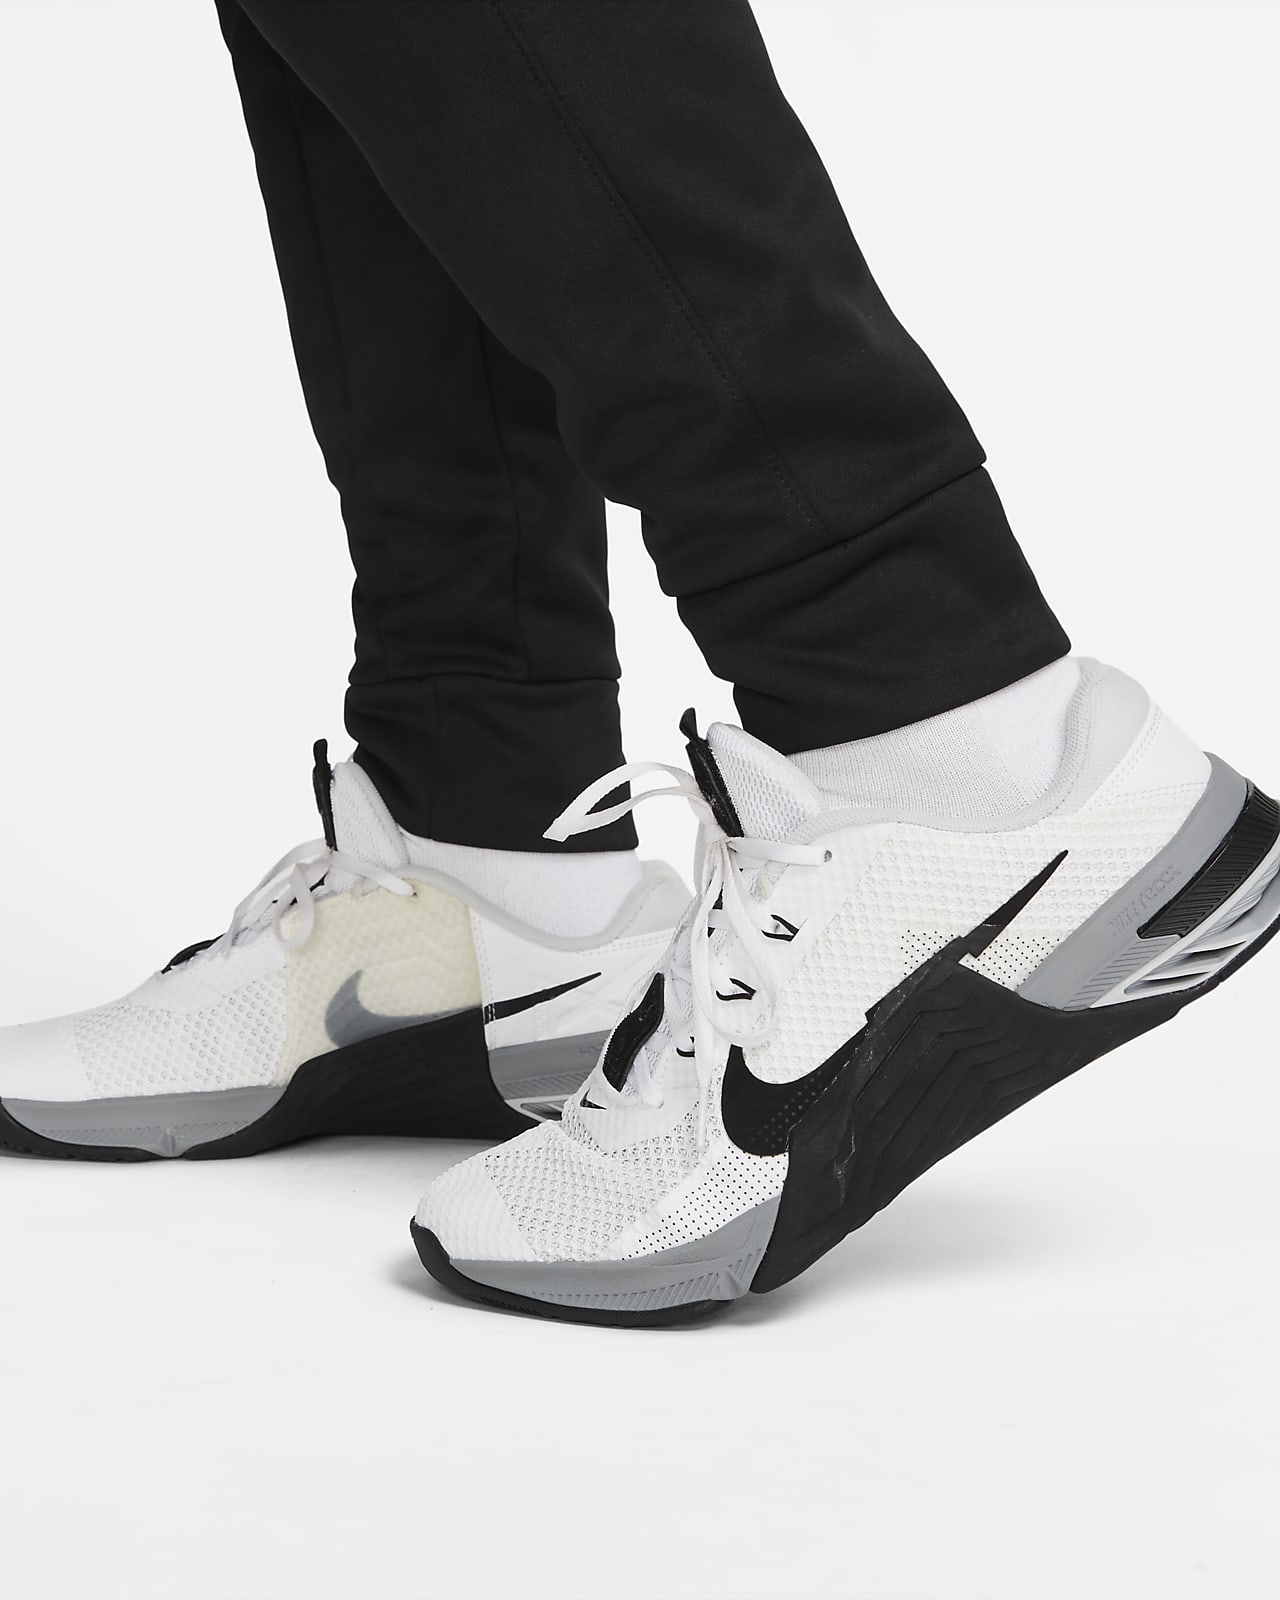 GetUSCart- Nike Men's Dri-Fit Hypercool Compression Training Leggings-Carbon  Heather-XL